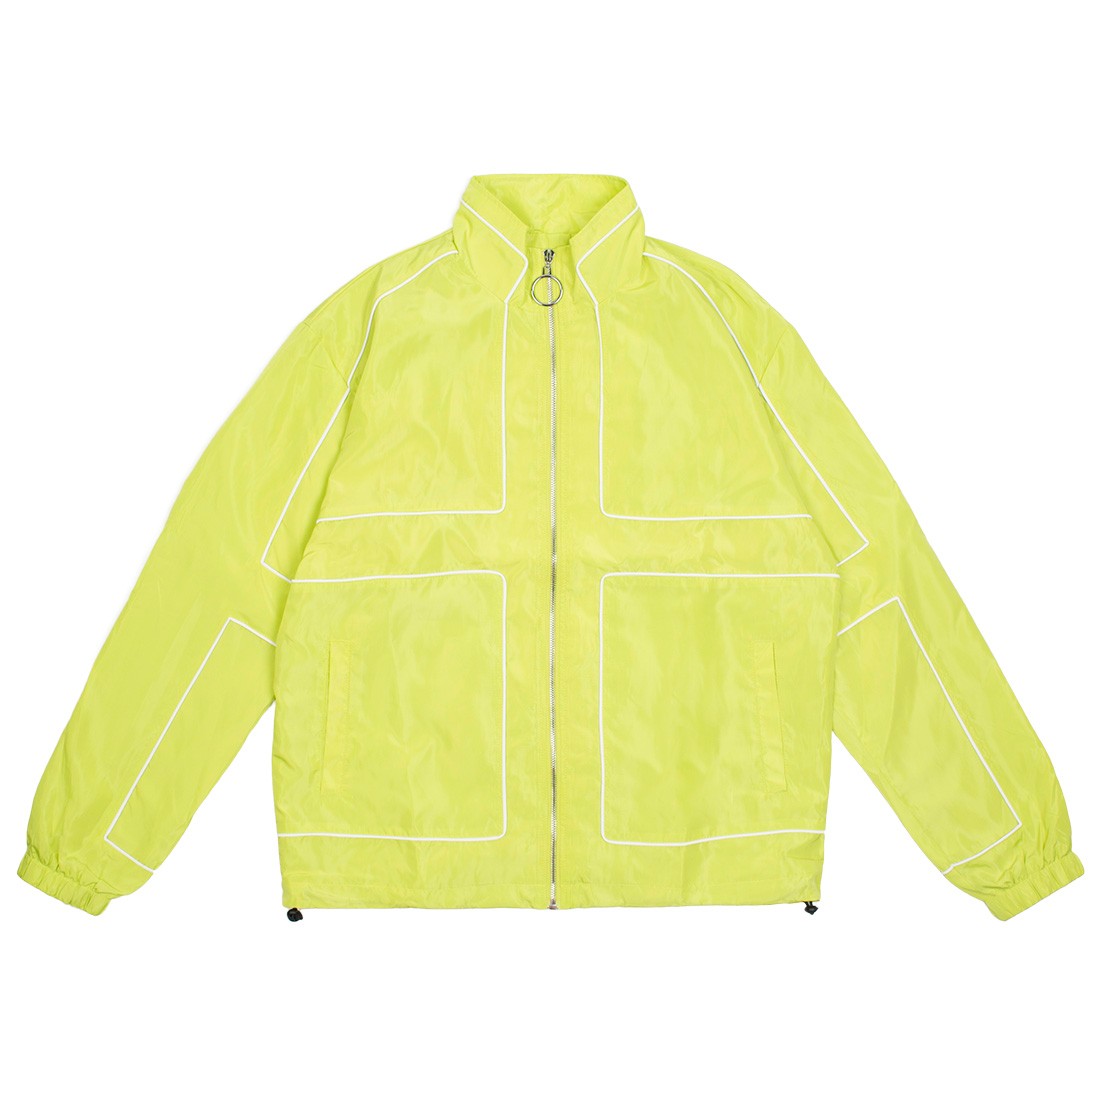 Lifted Anchors Men Vector Jacket (yellow / volt)